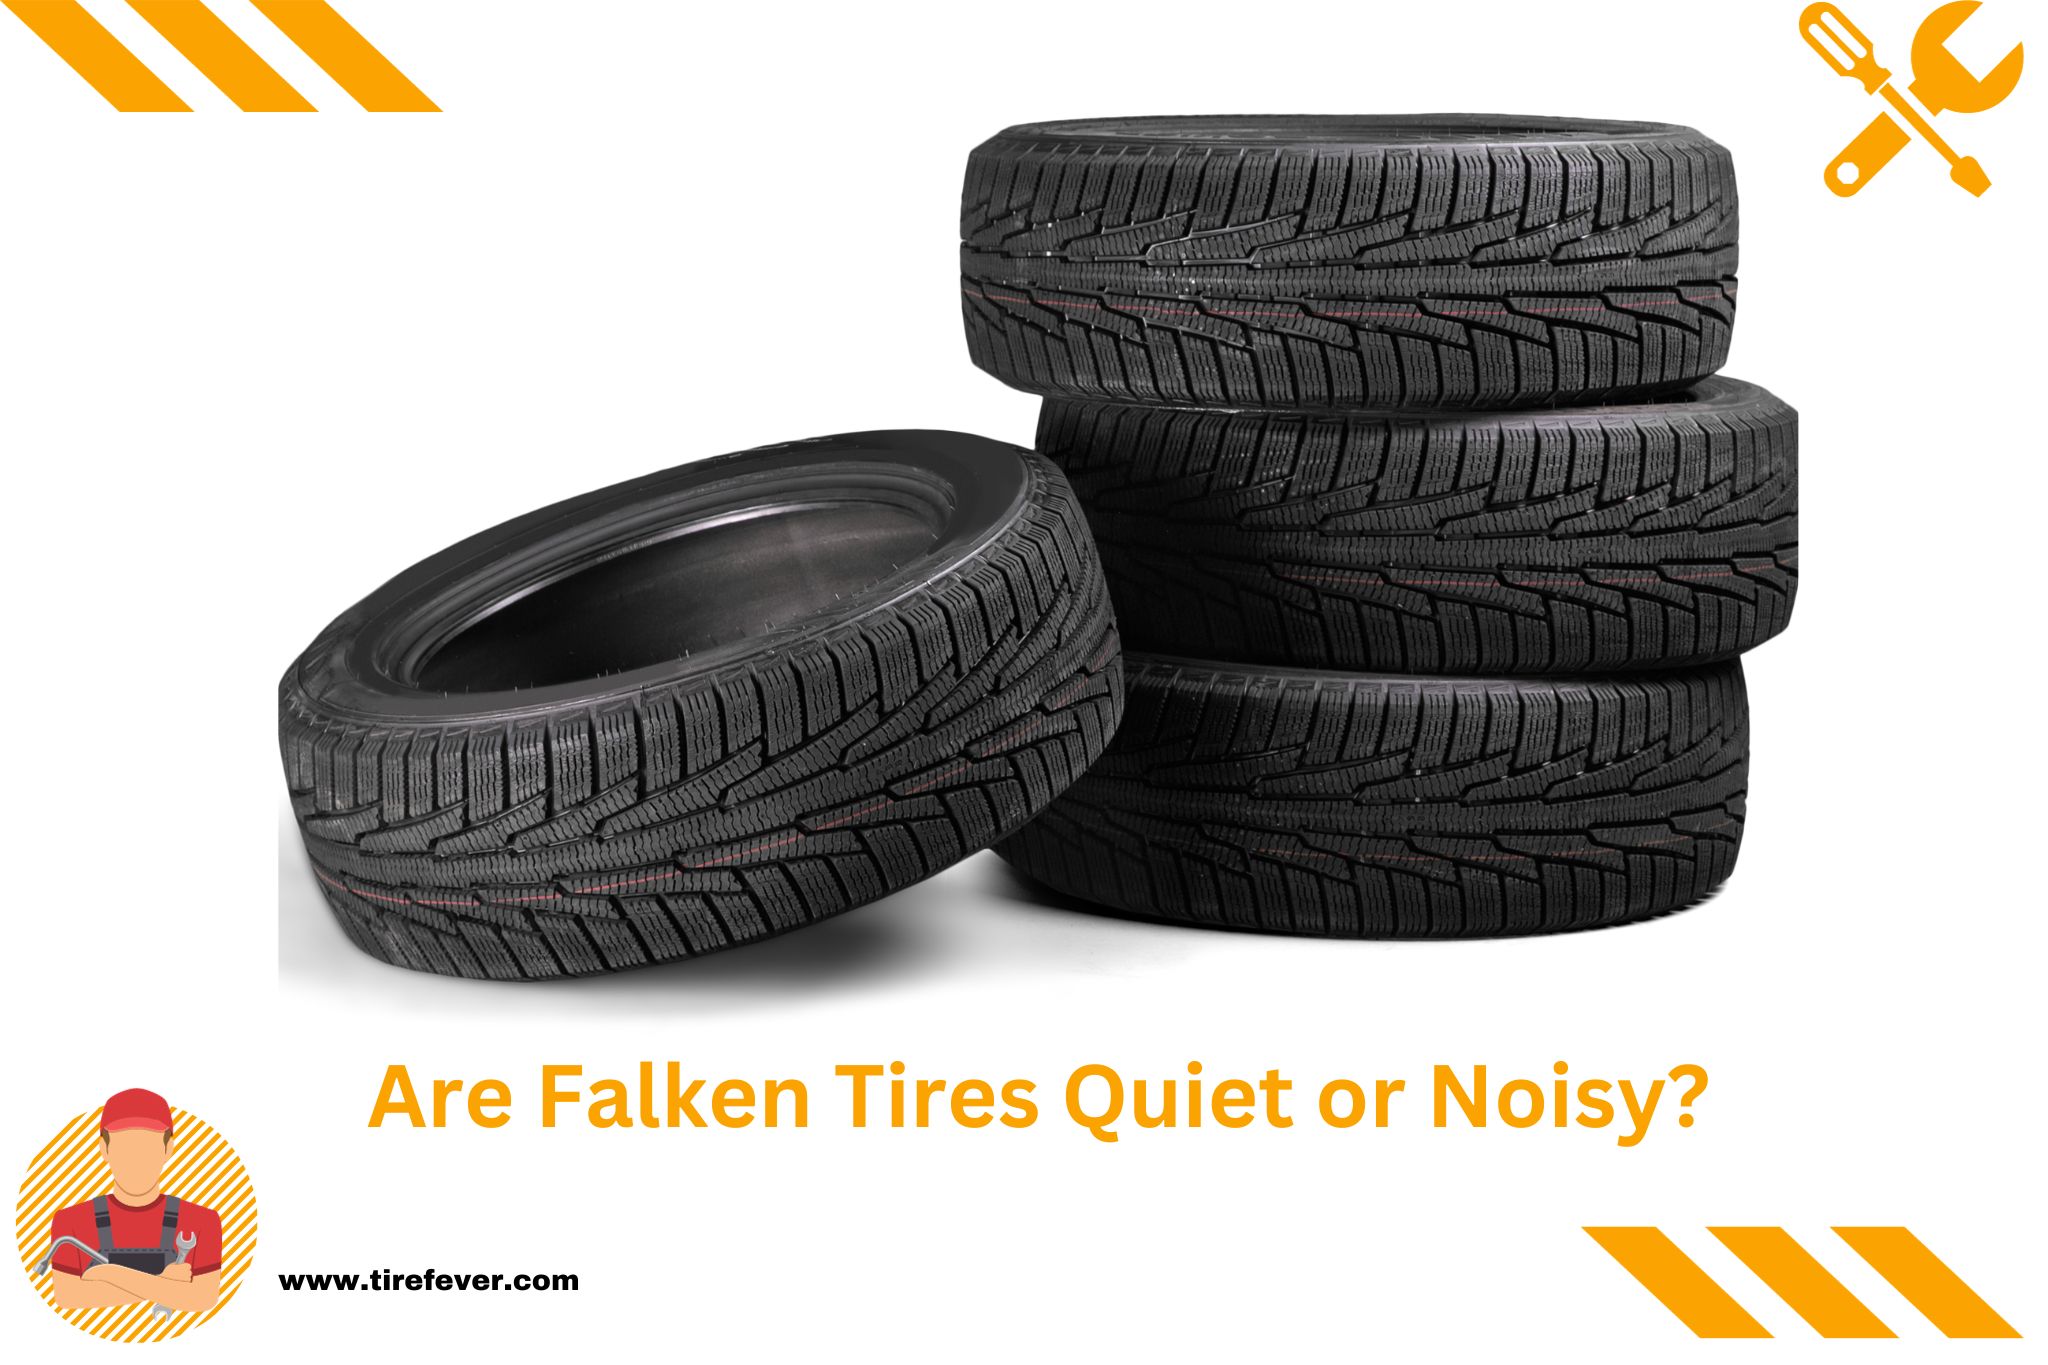 Are Falken Tires Quiet or Noisy?